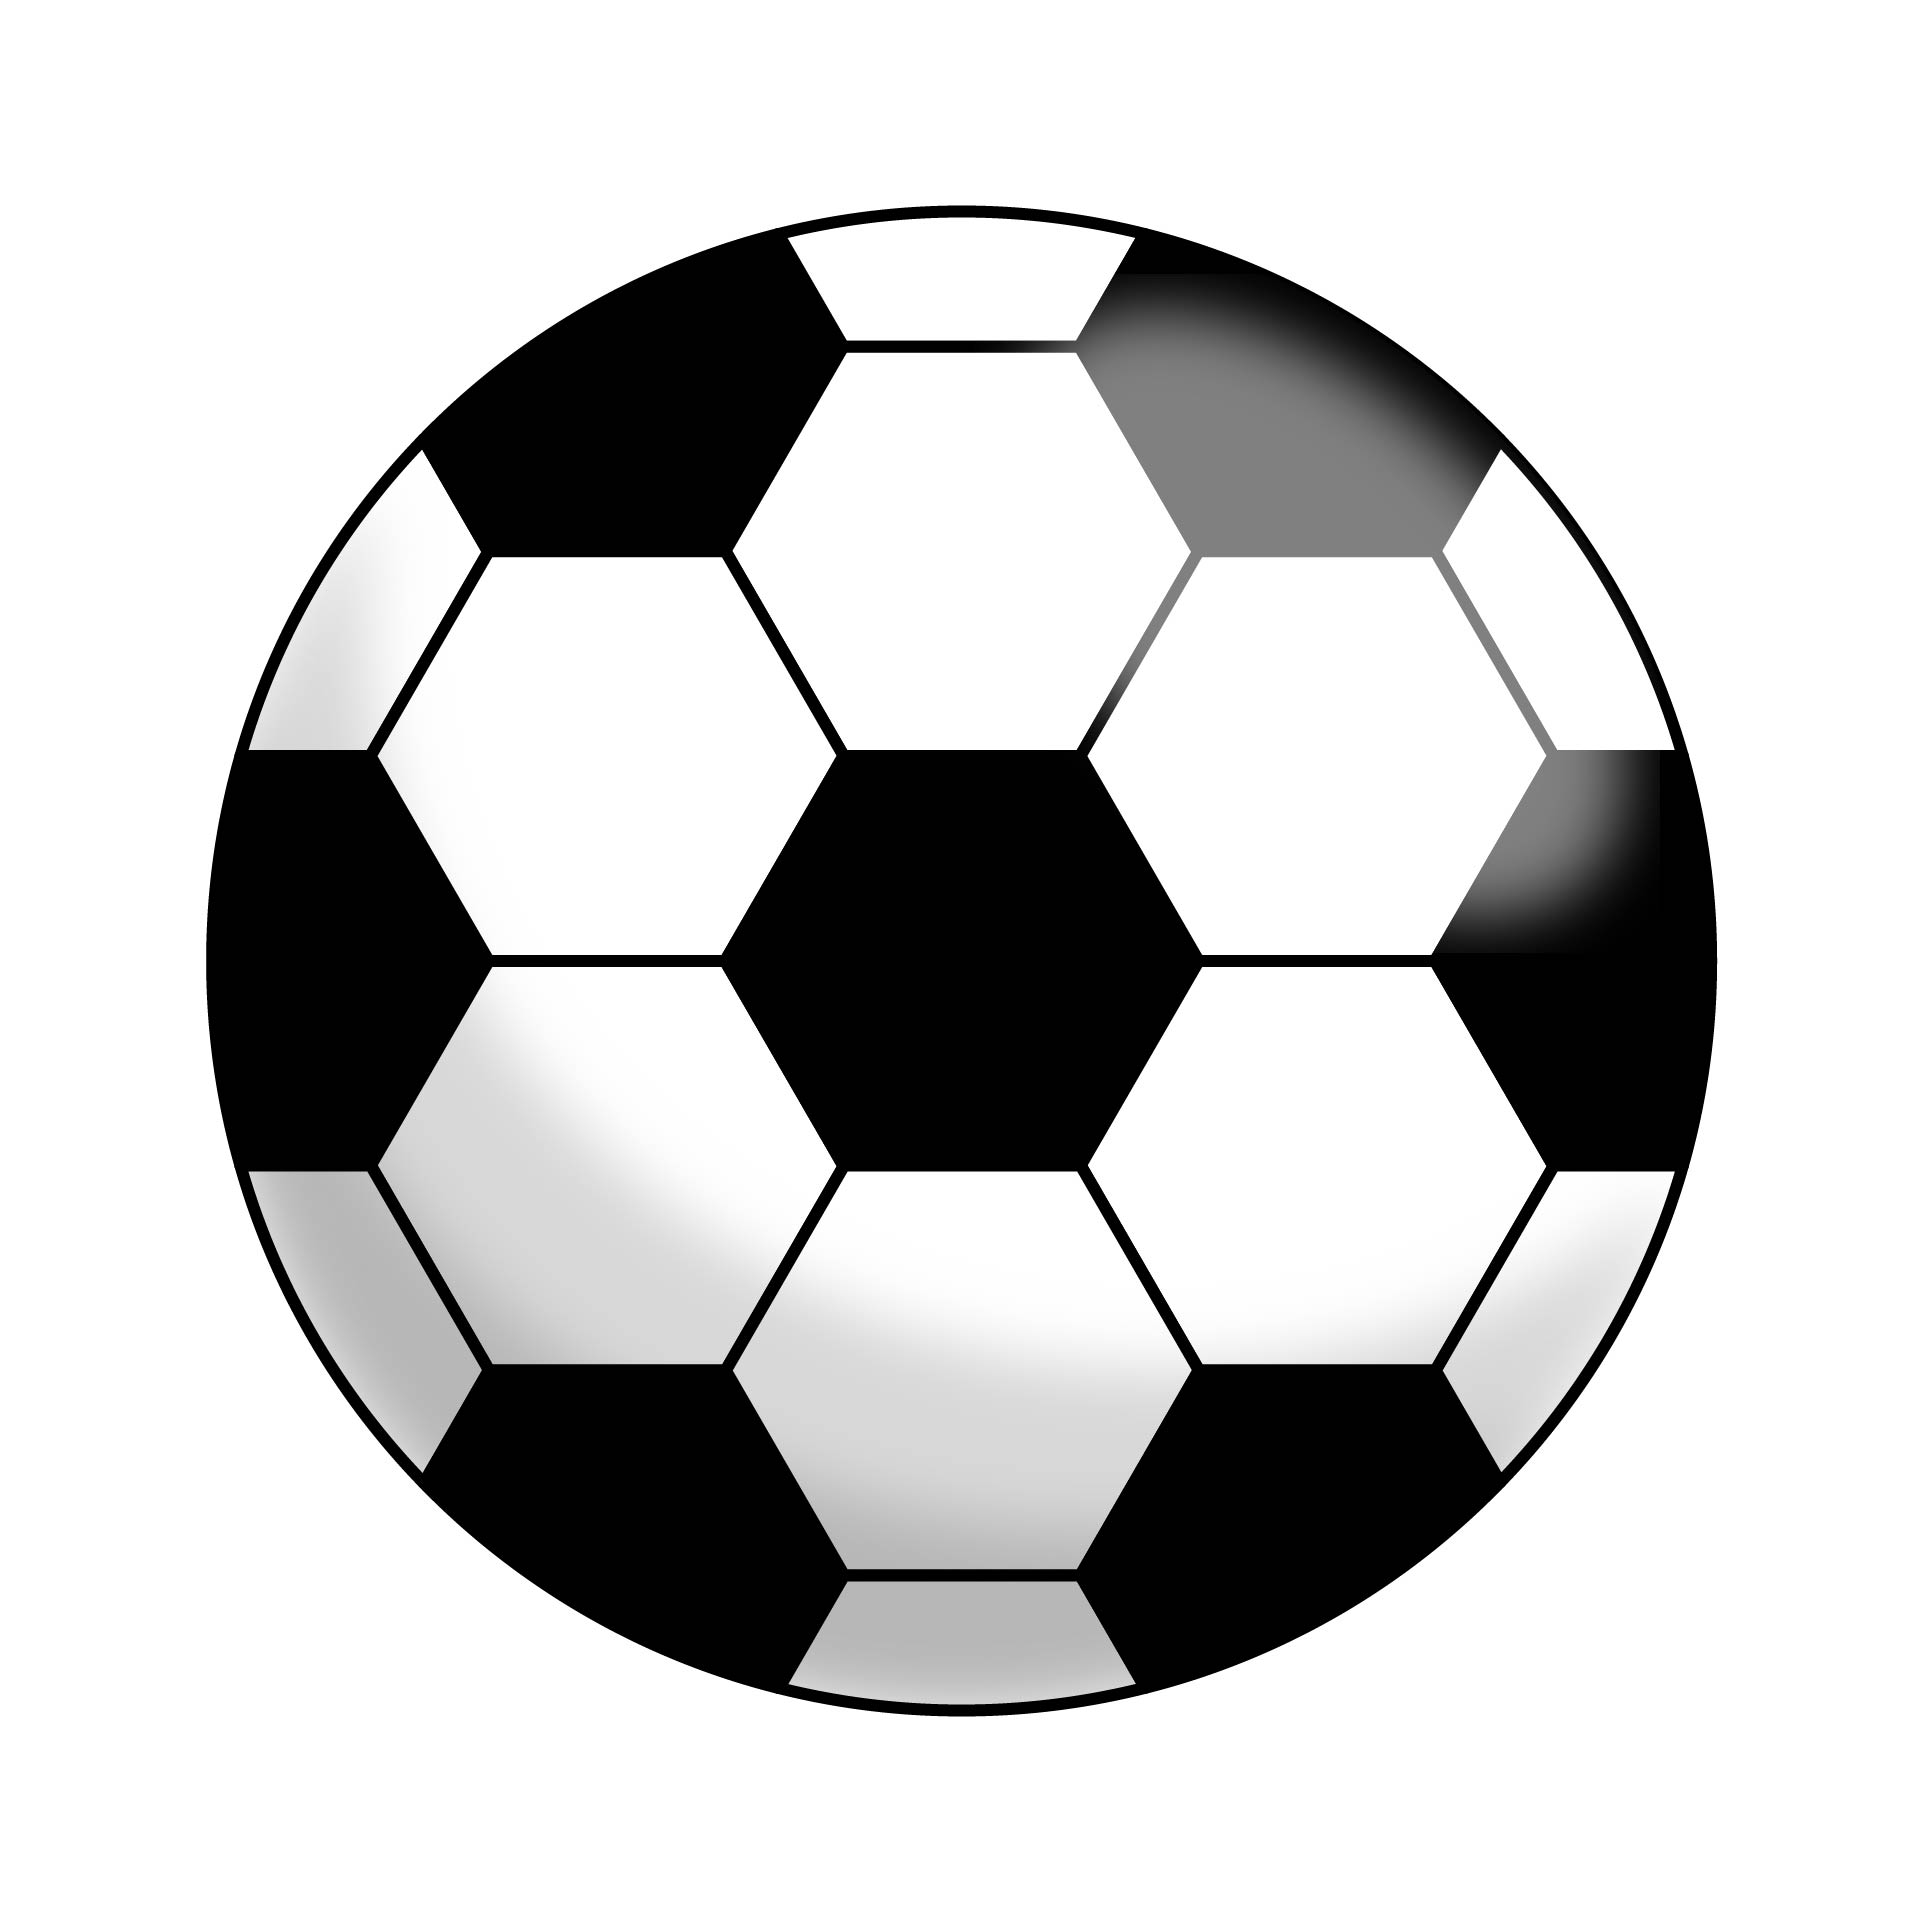 Printable Soccer Ball Pattern Template